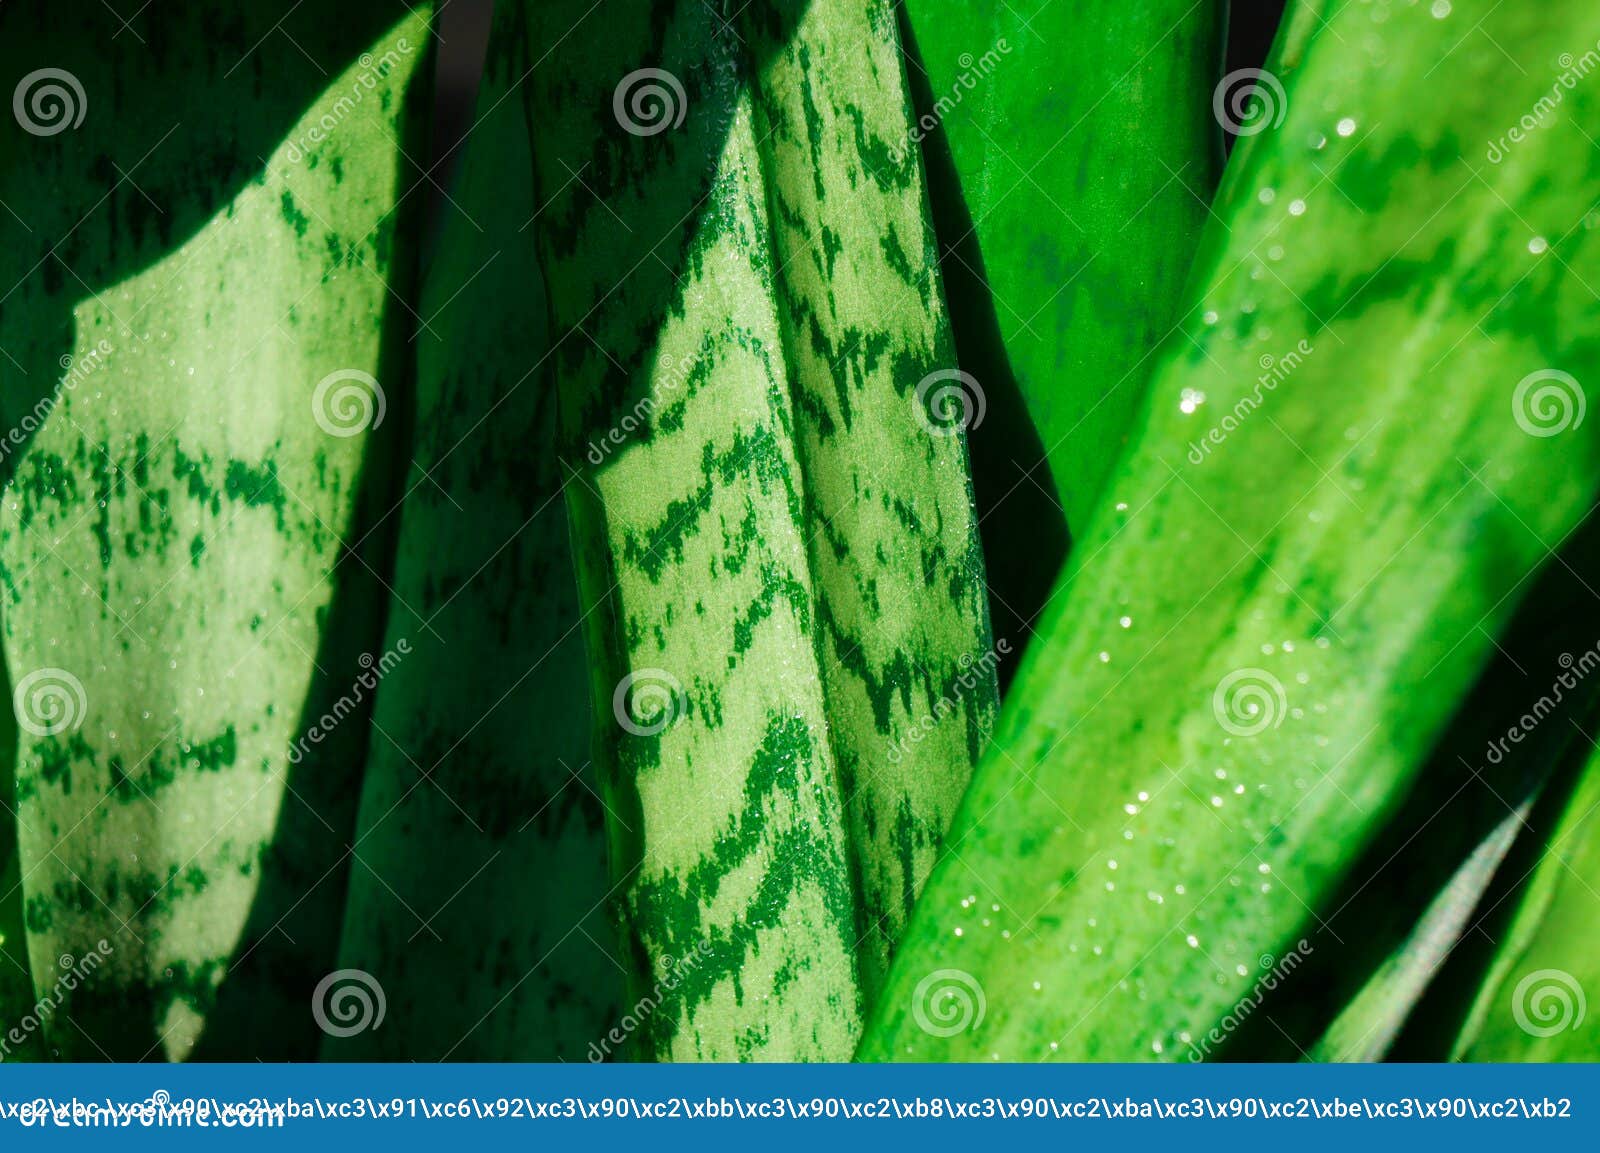 Genus Sansevieria Home Plant Stock Photo - Image of leaf, leaves: 176024004